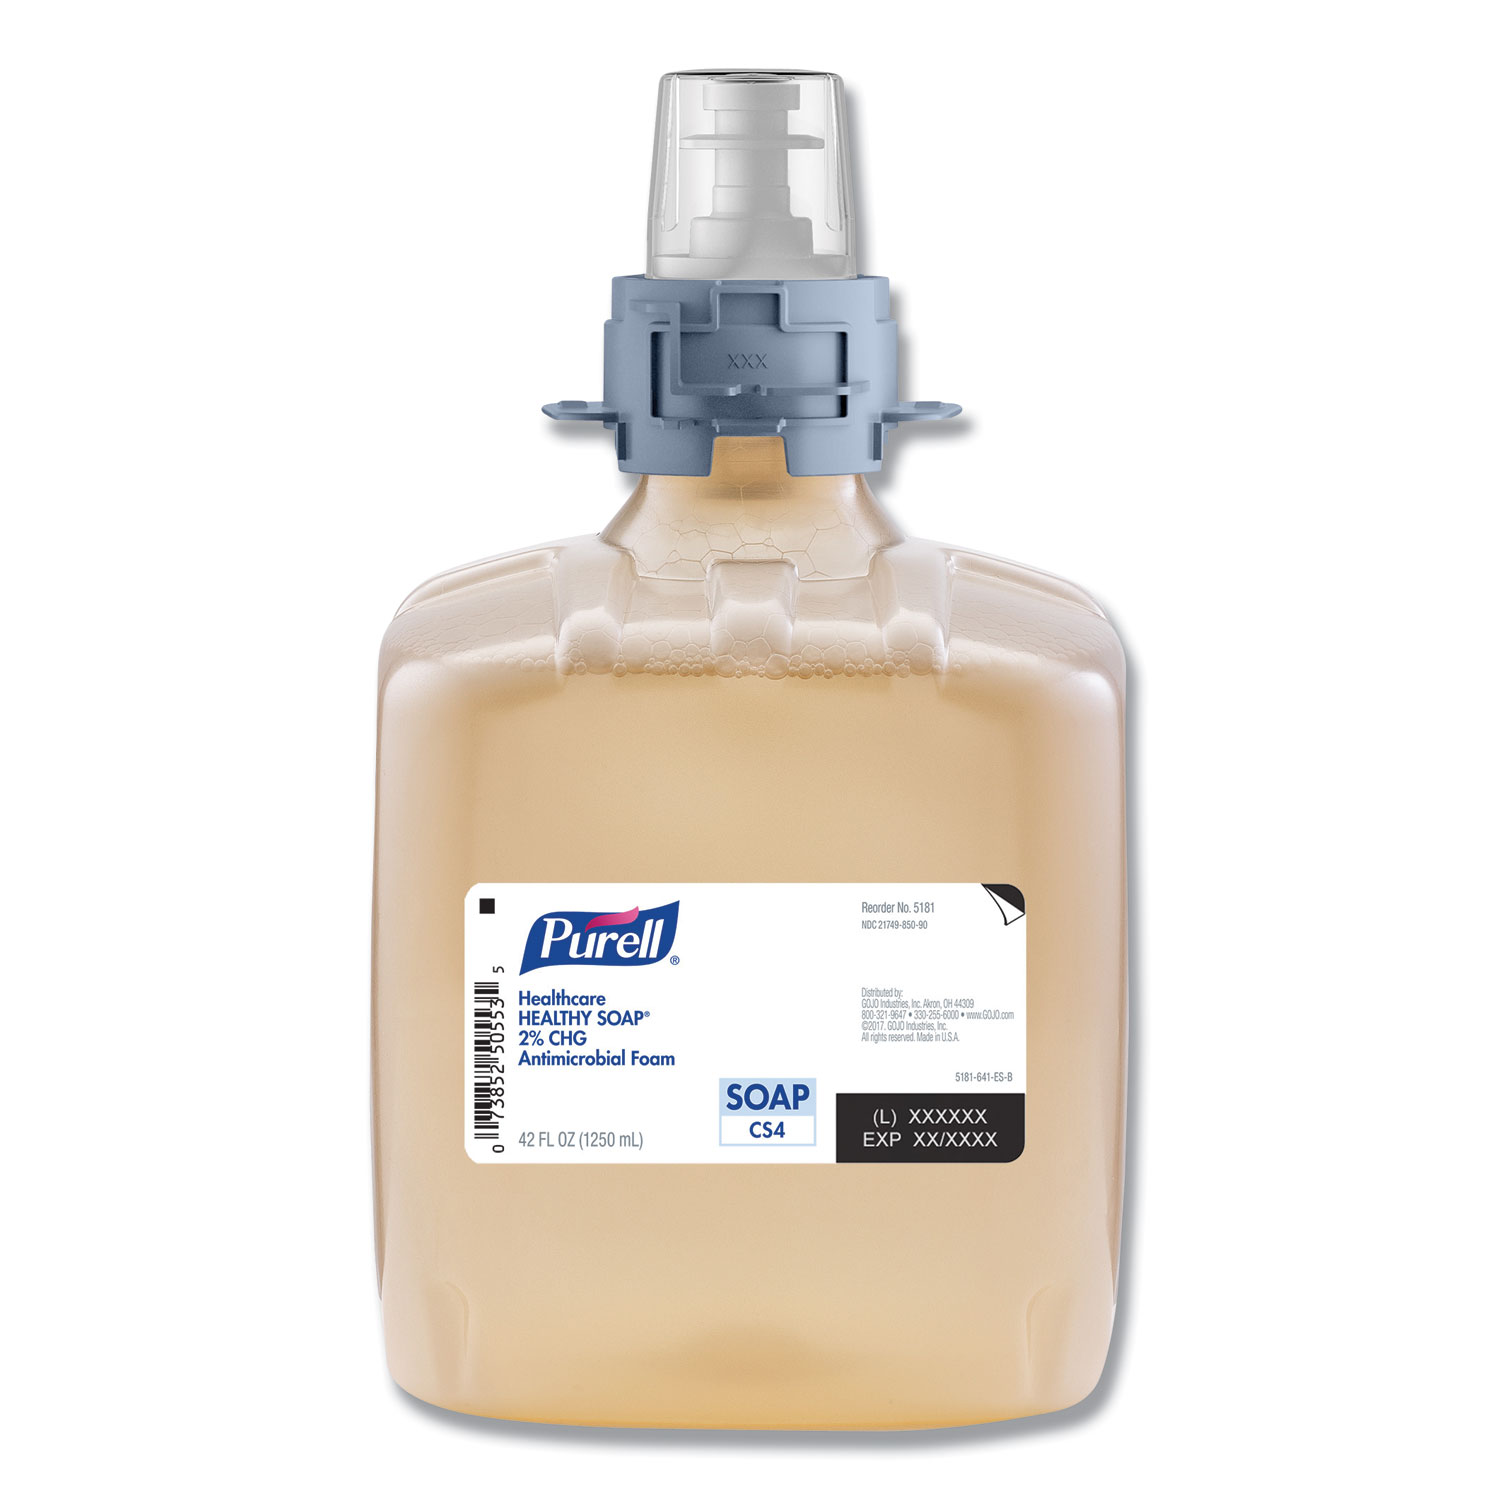 Healthy Soap 2.0% CHG Antimicrobial Foam,1250 mL, 3/Carton